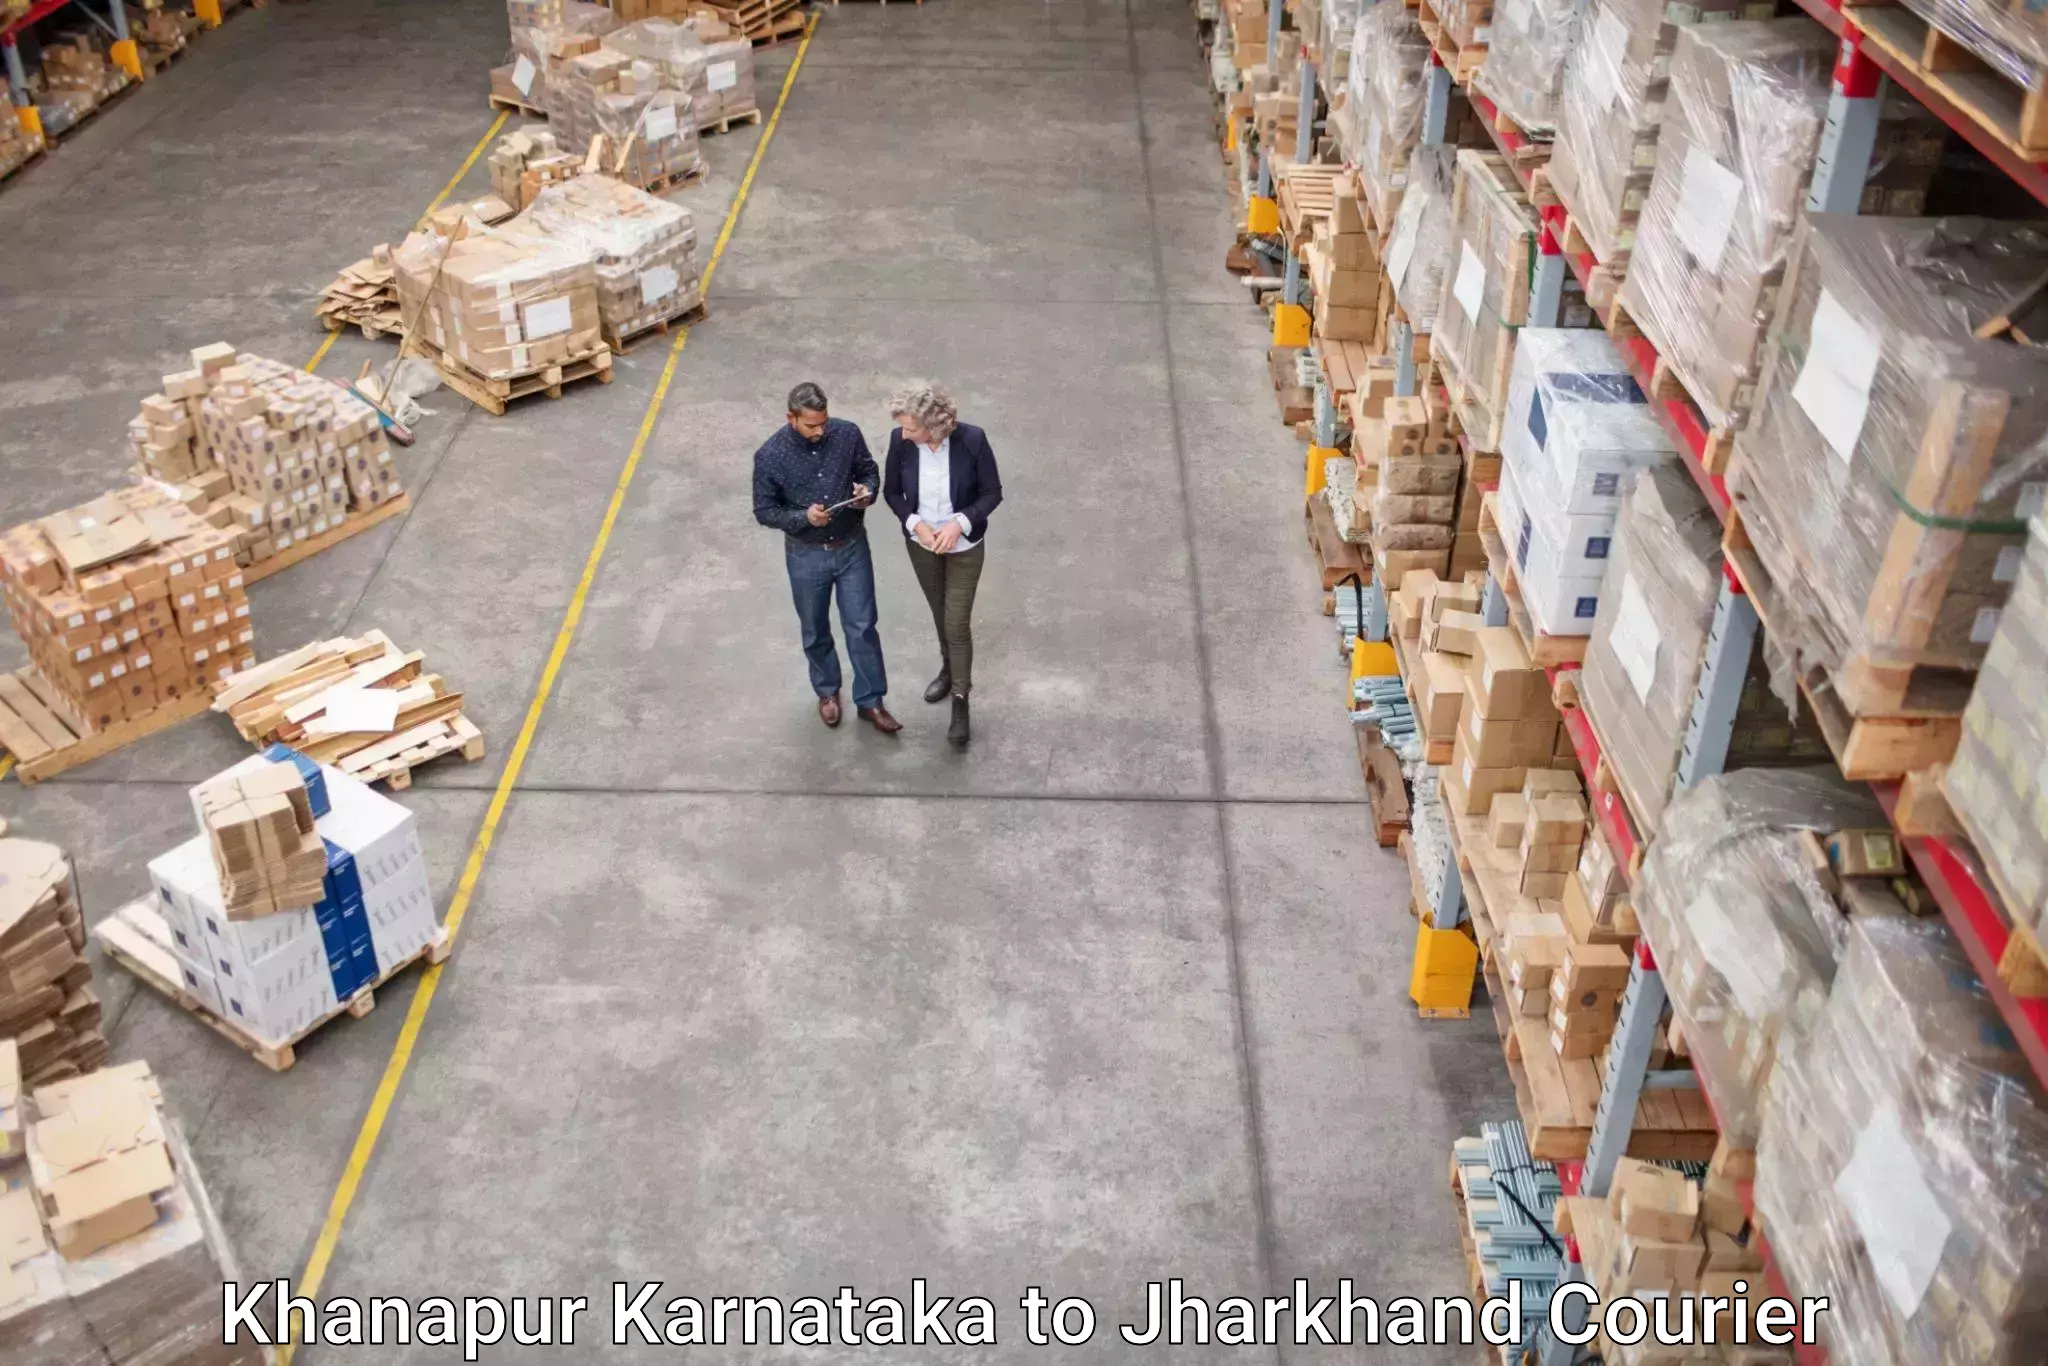 Reliable logistics providers Khanapur Karnataka to Nirsa